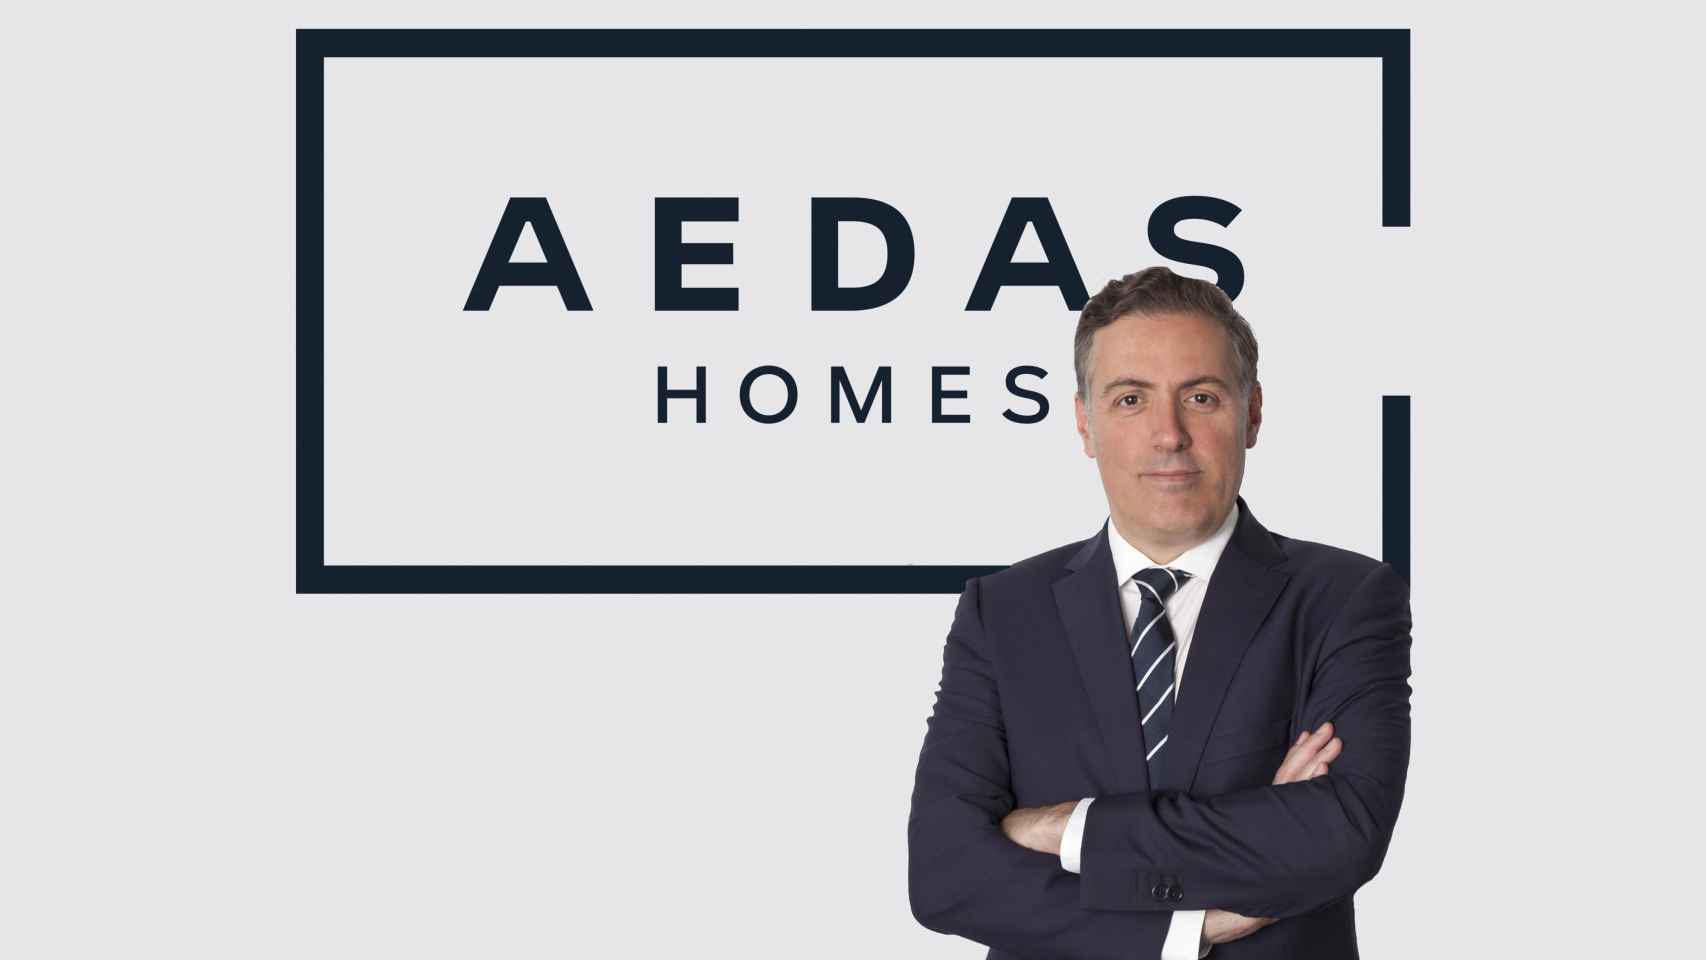 AEDAS Homes promoverá más viviendas de alquiler en España / AEDAS